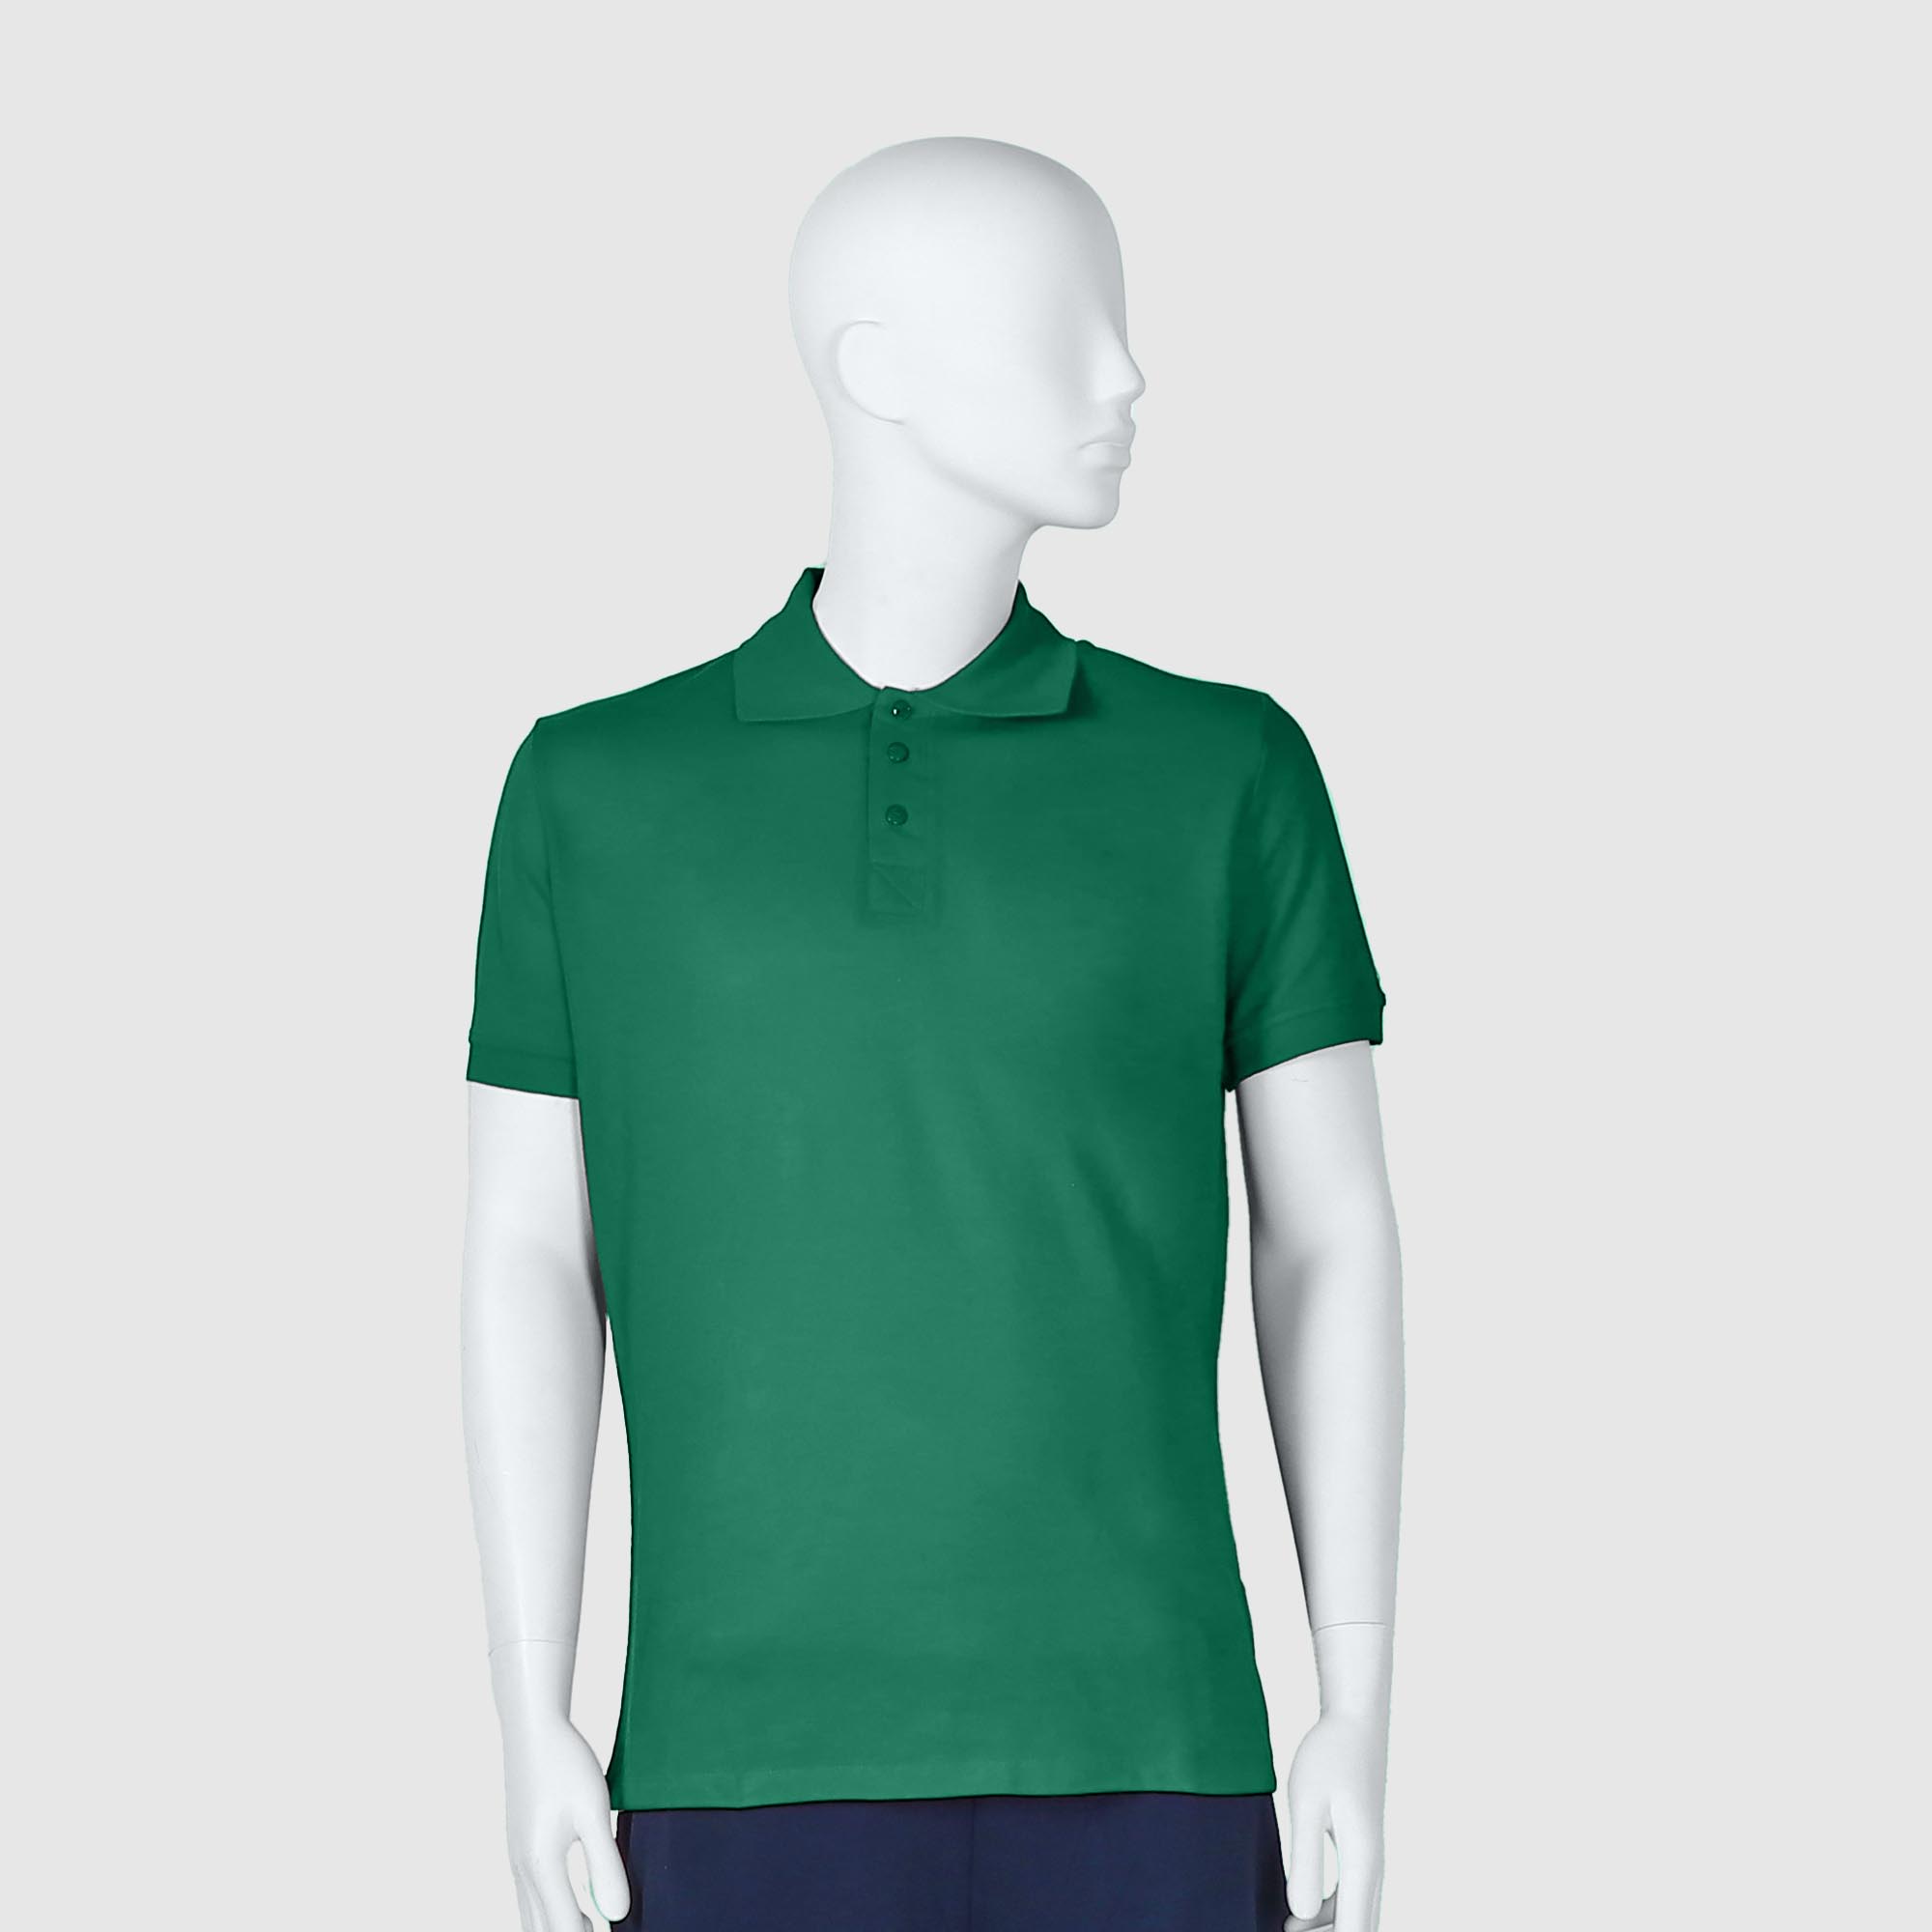 Мужская футболка-поло Diva Teks зелёная (DTD-09), цвет зелёный, размер 54-56